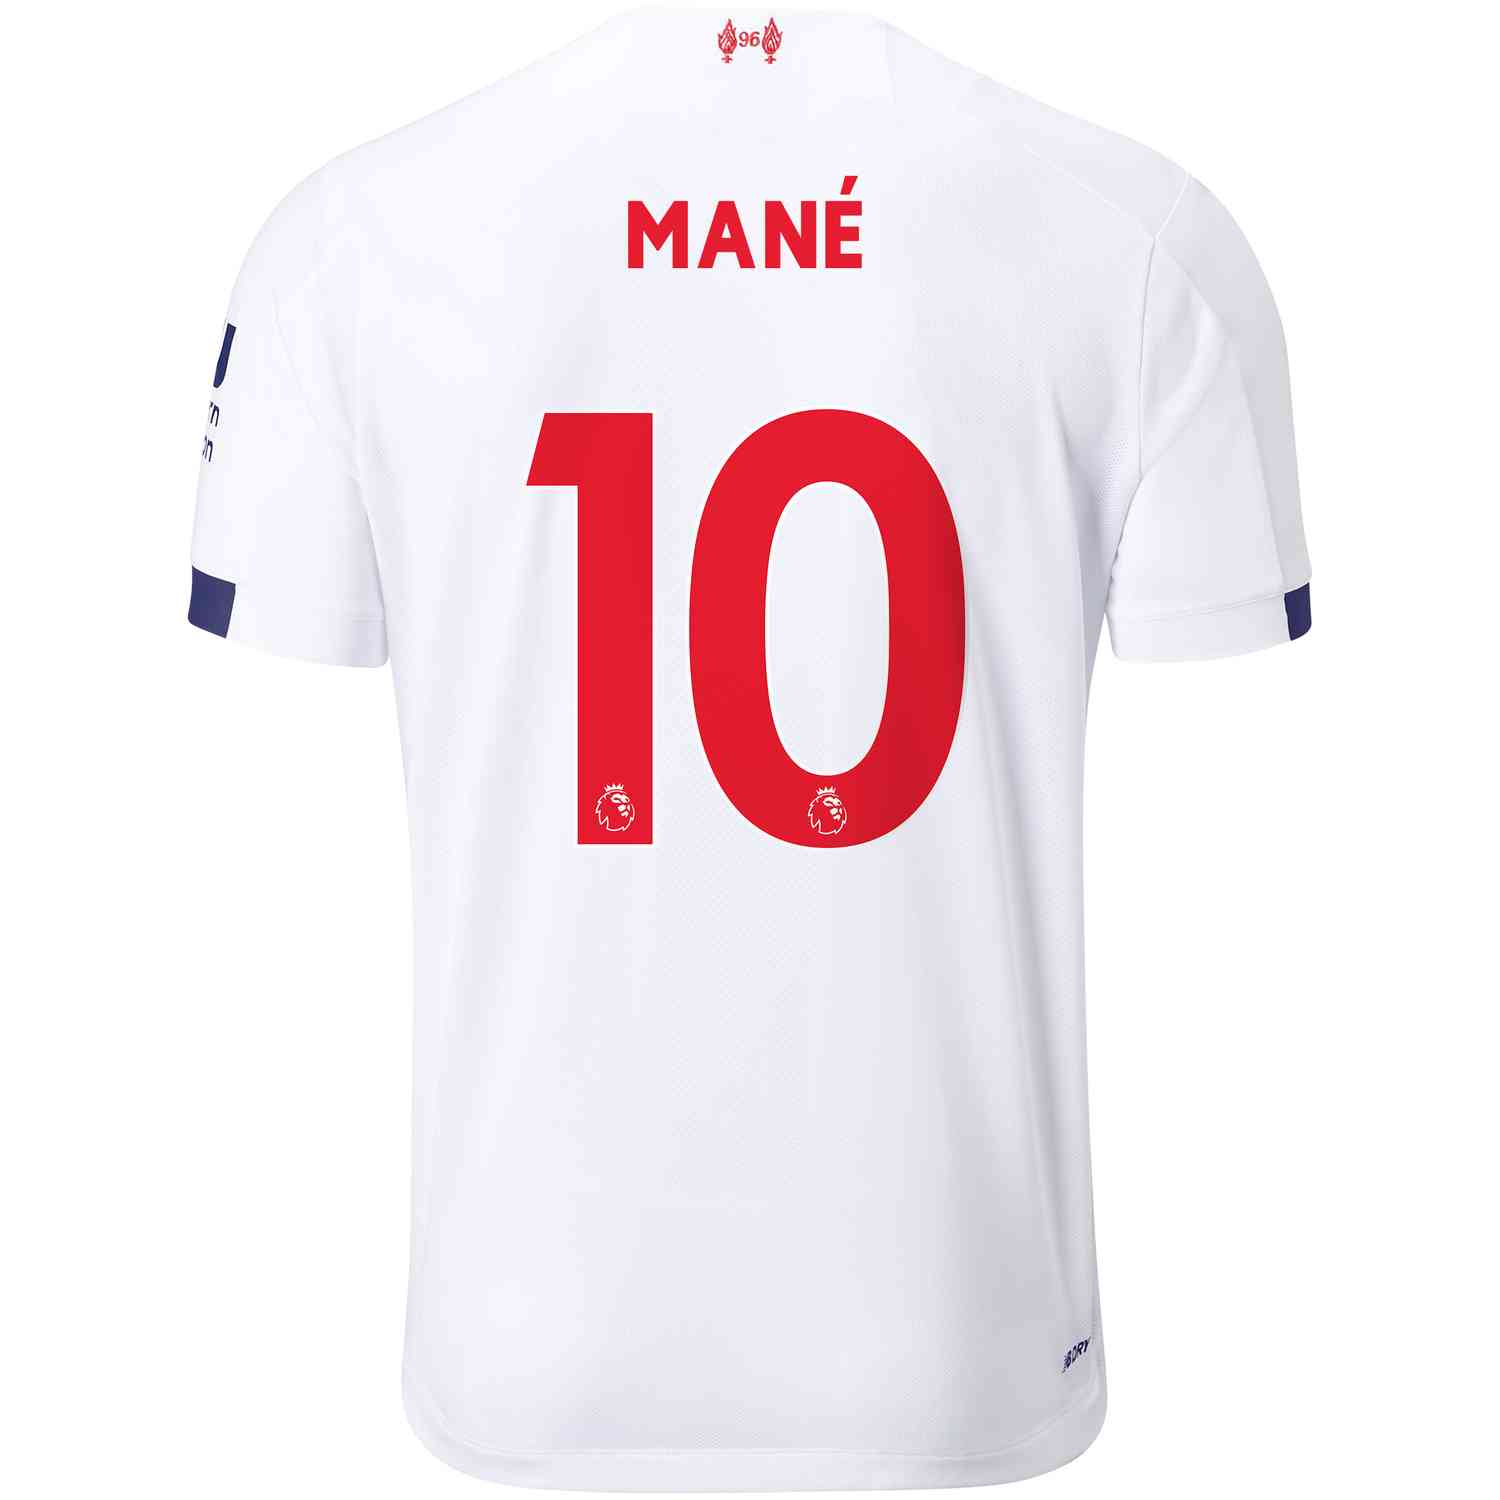 mane shirt number